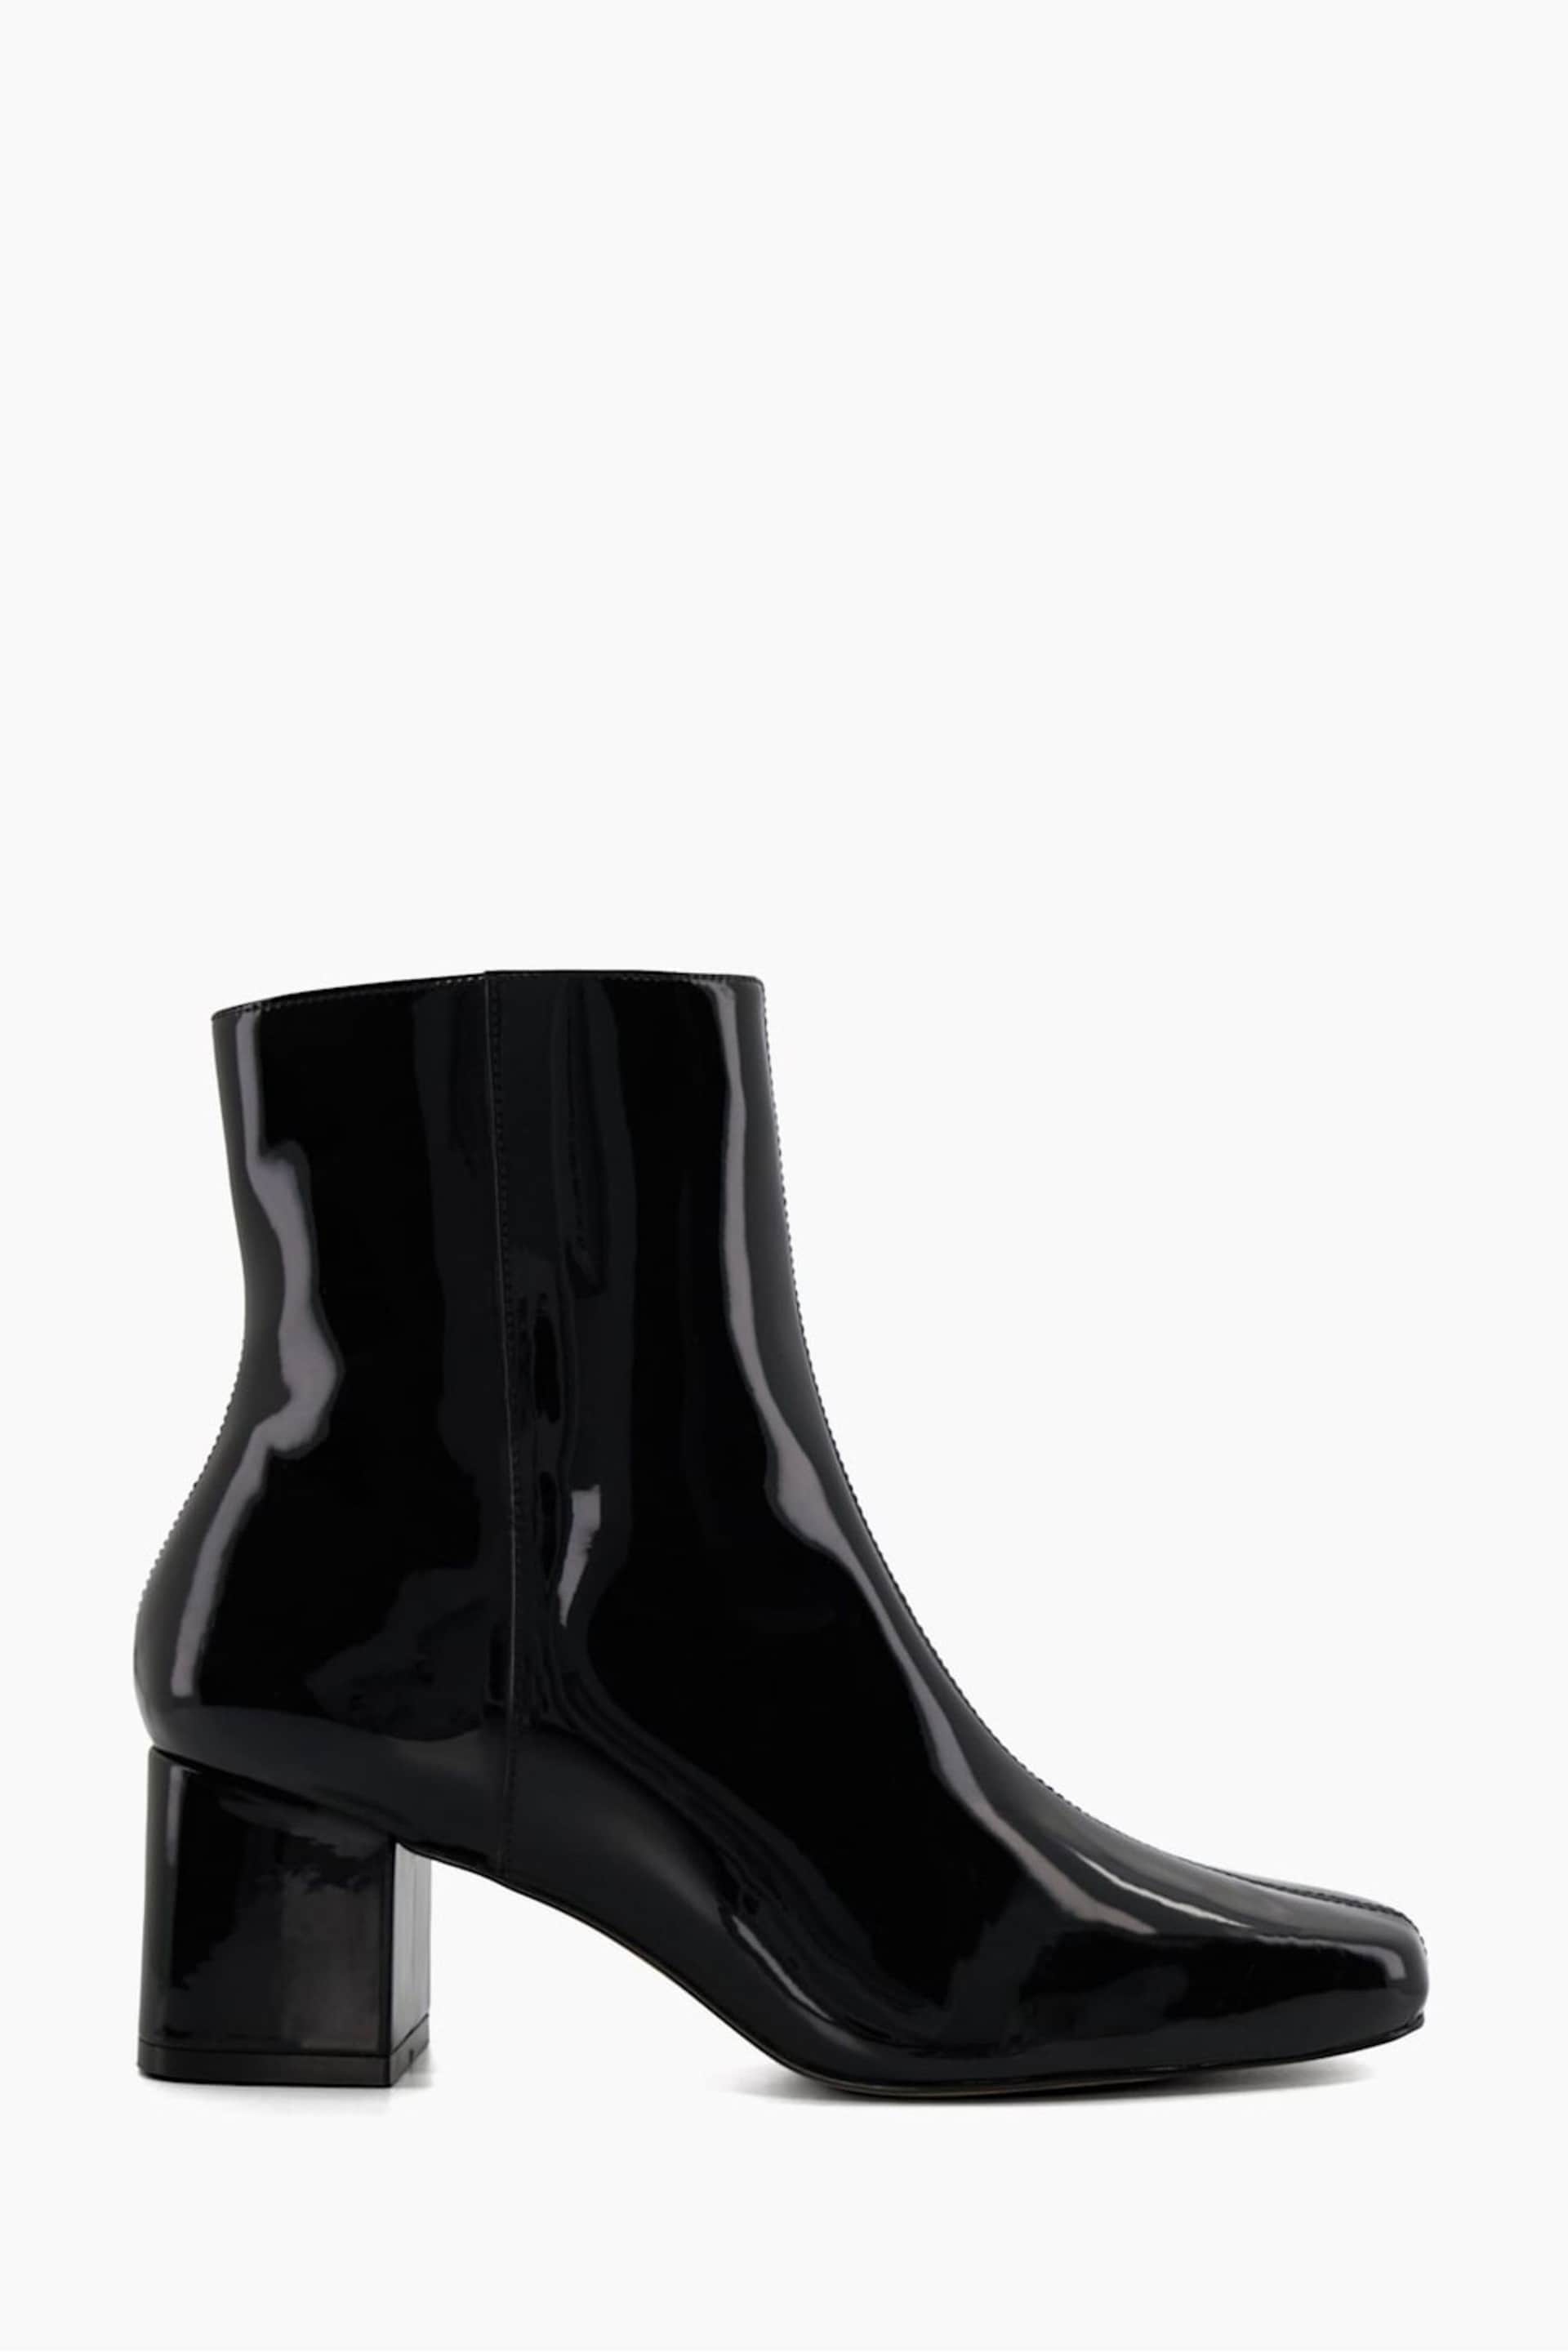 Dune London Black Branded Smart Block Heel Onsen Ankle Boots - Image 1 of 6